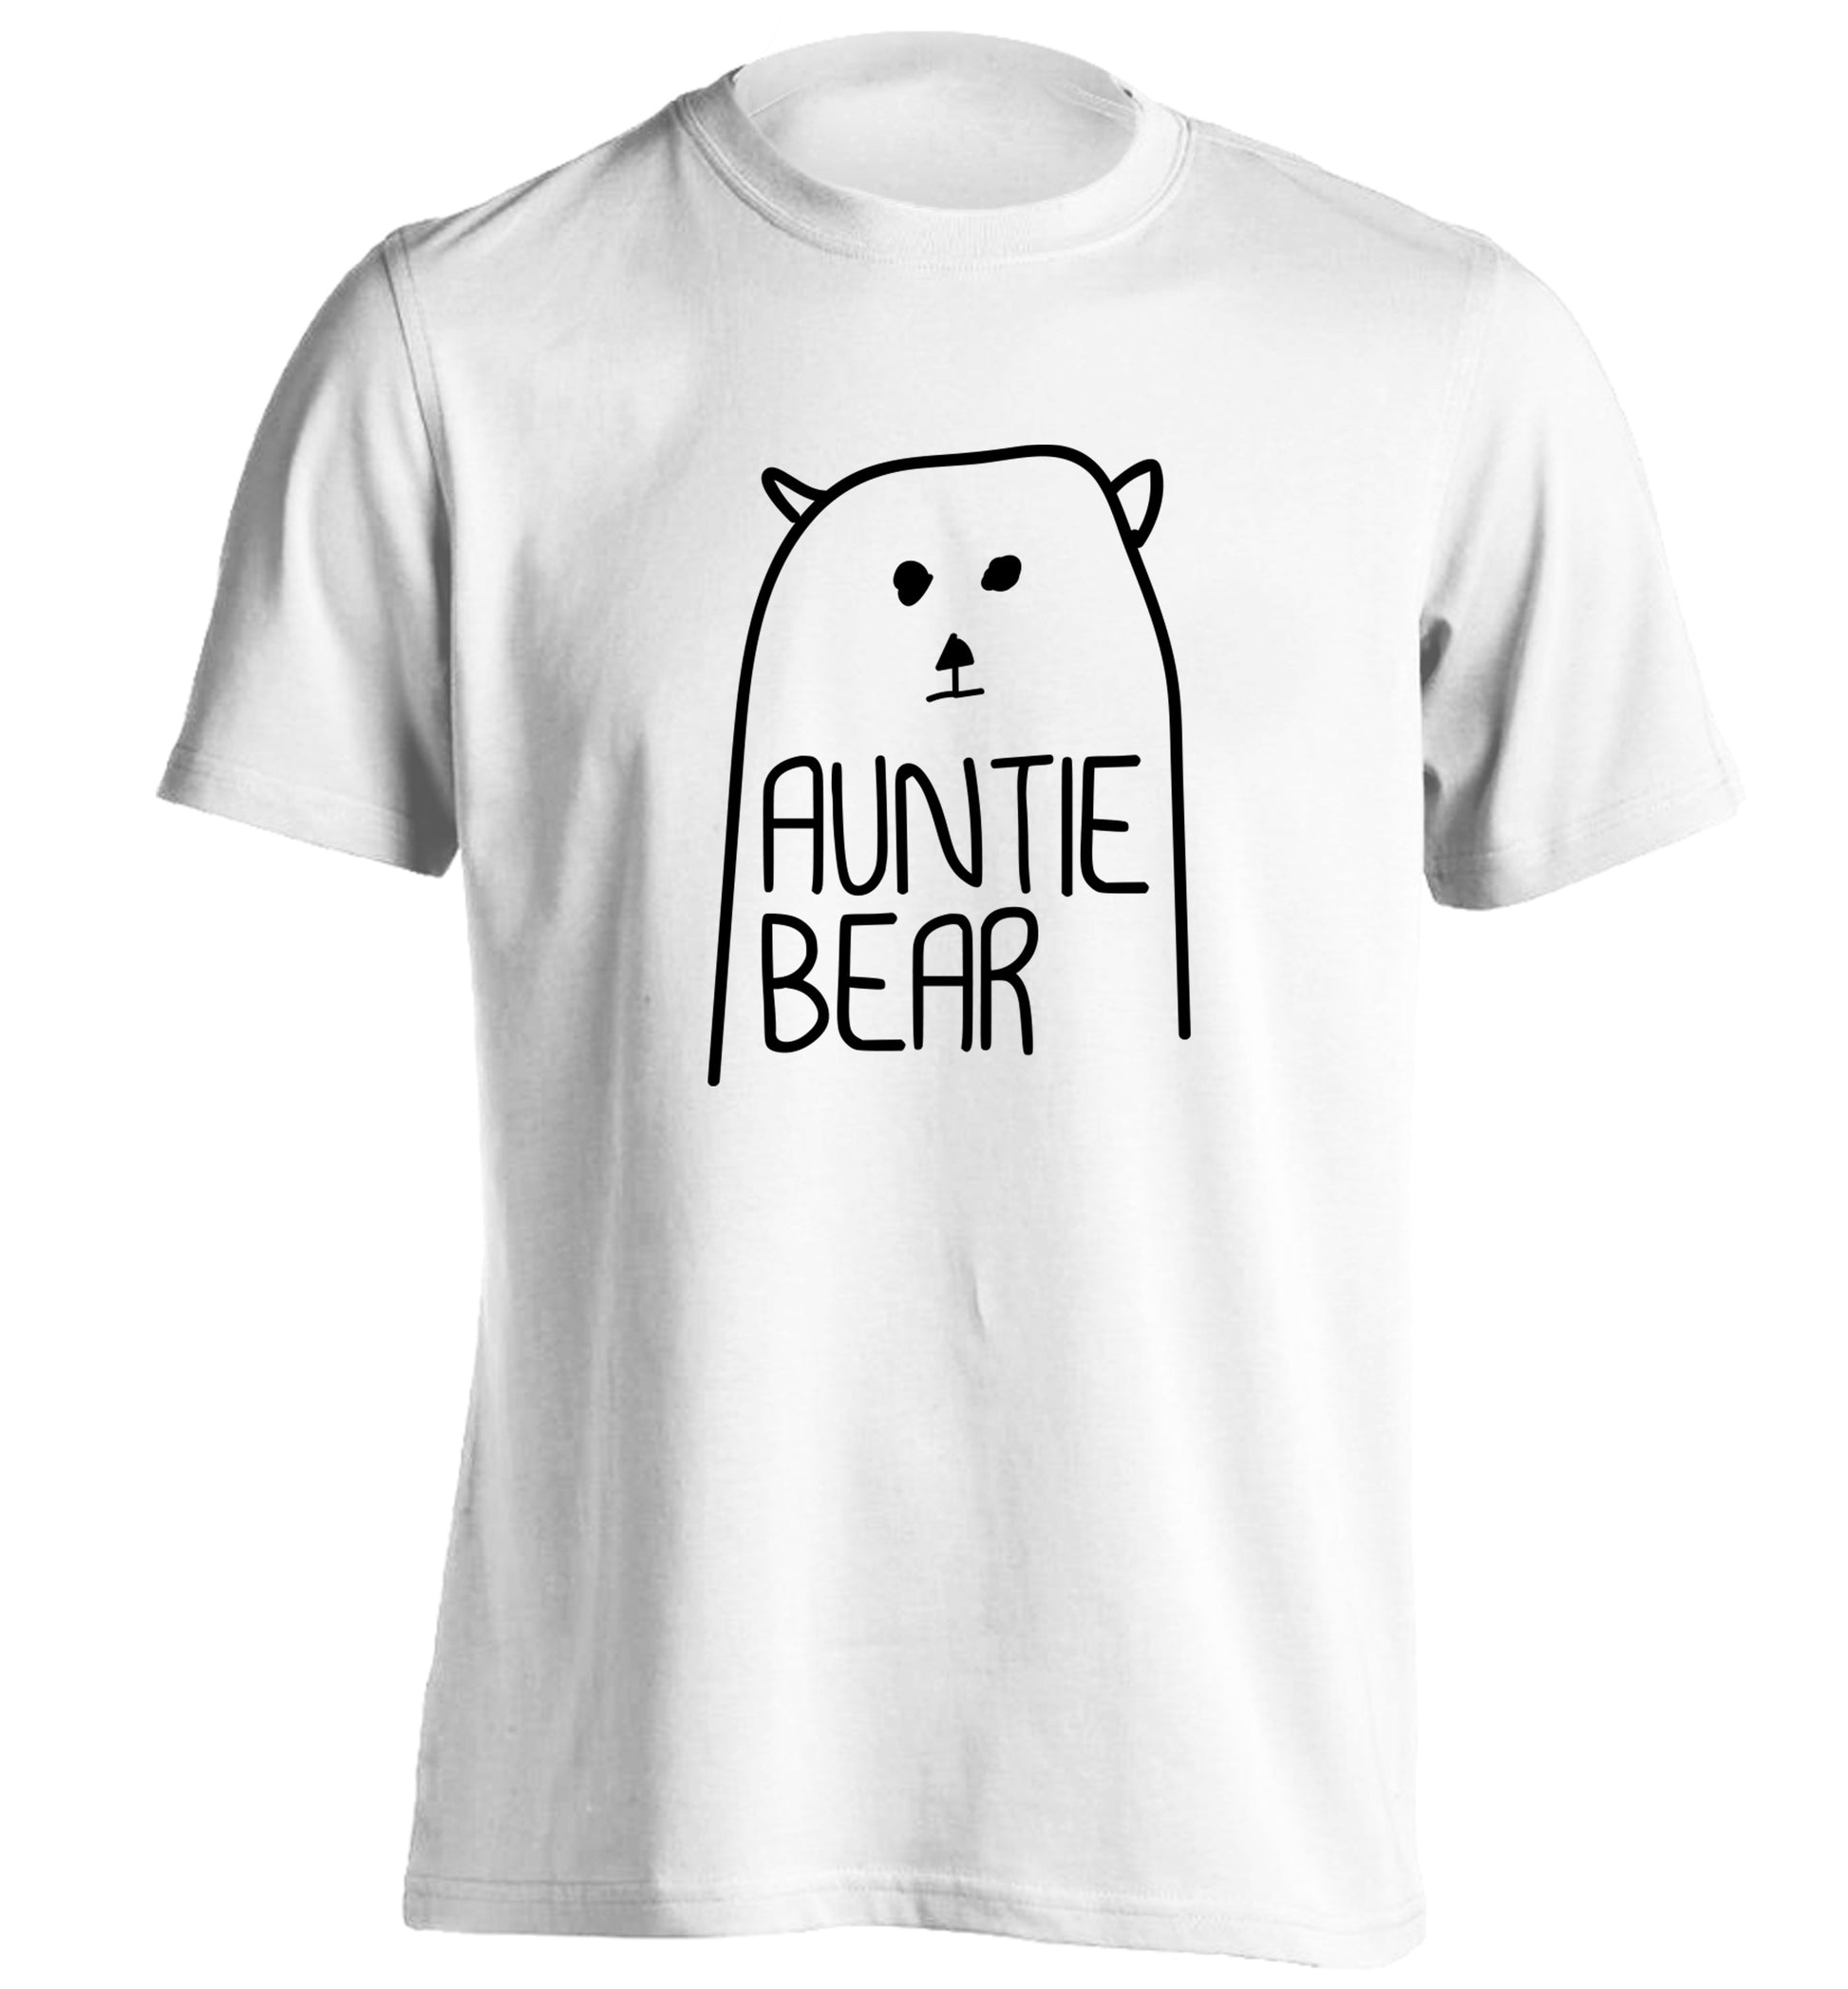 Auntie bear adults unisex white Tshirt 2XL